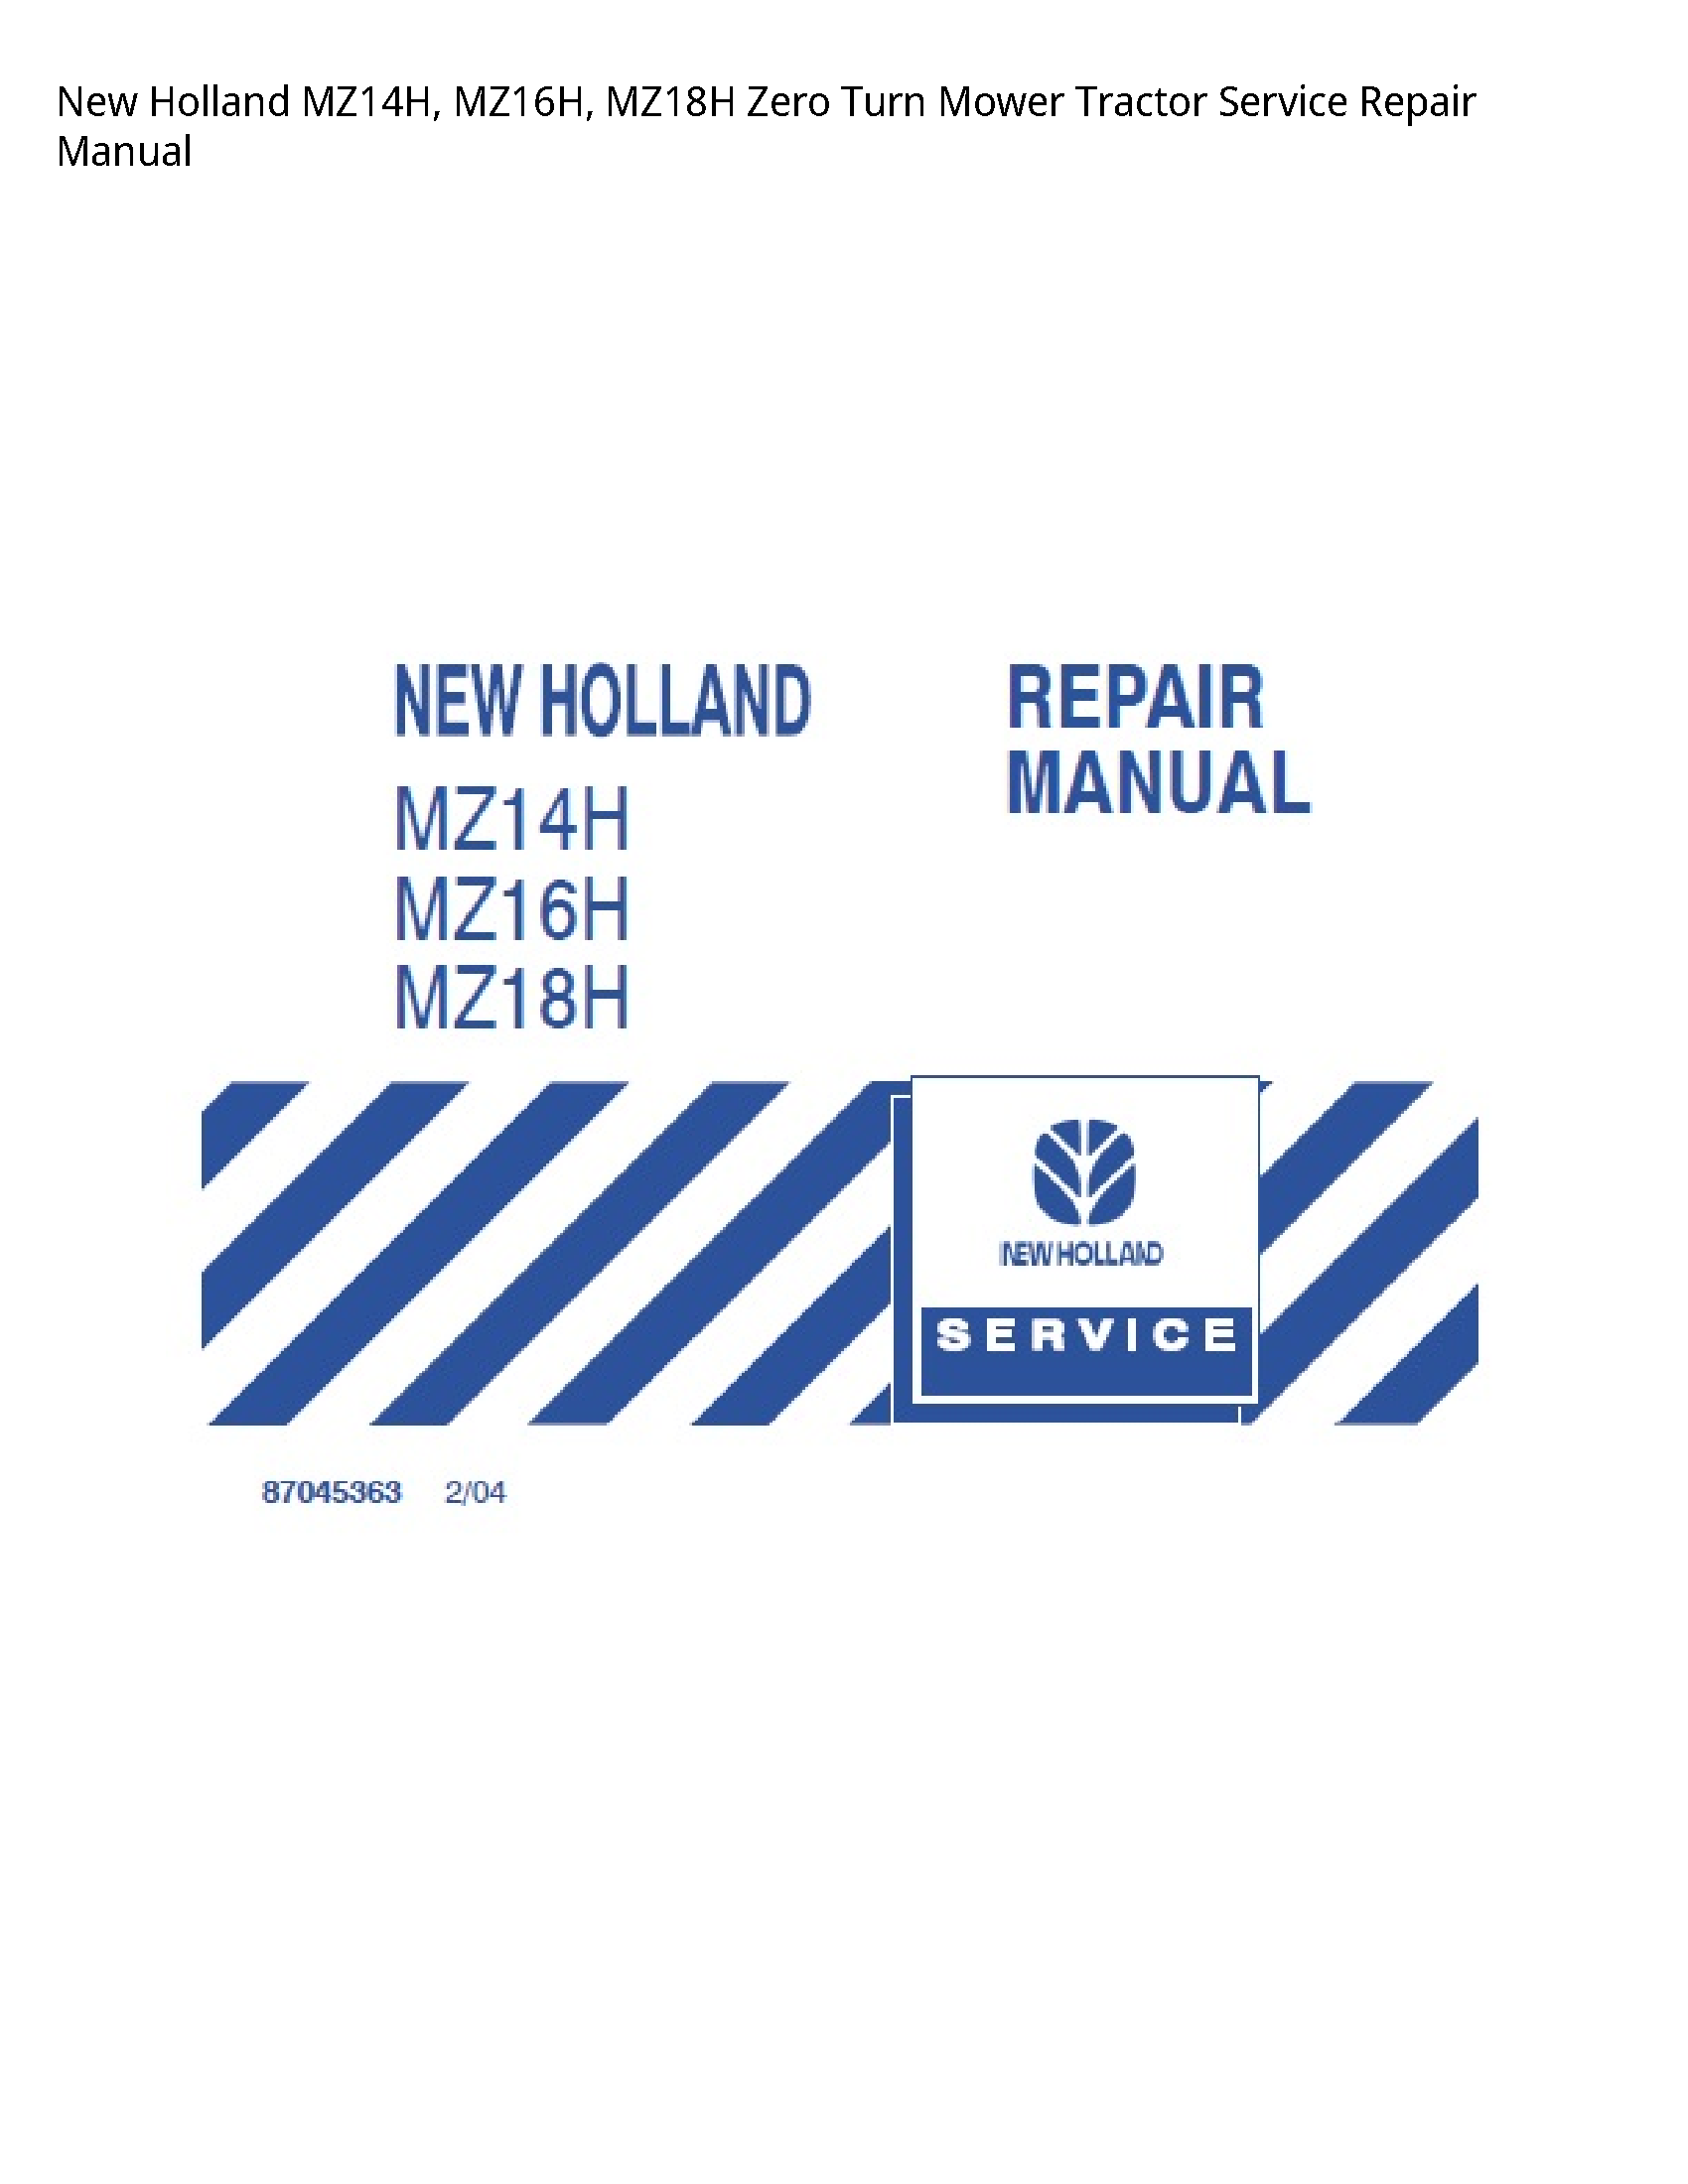 New Holland MZ14H Zero Turn Mower Tractor manual